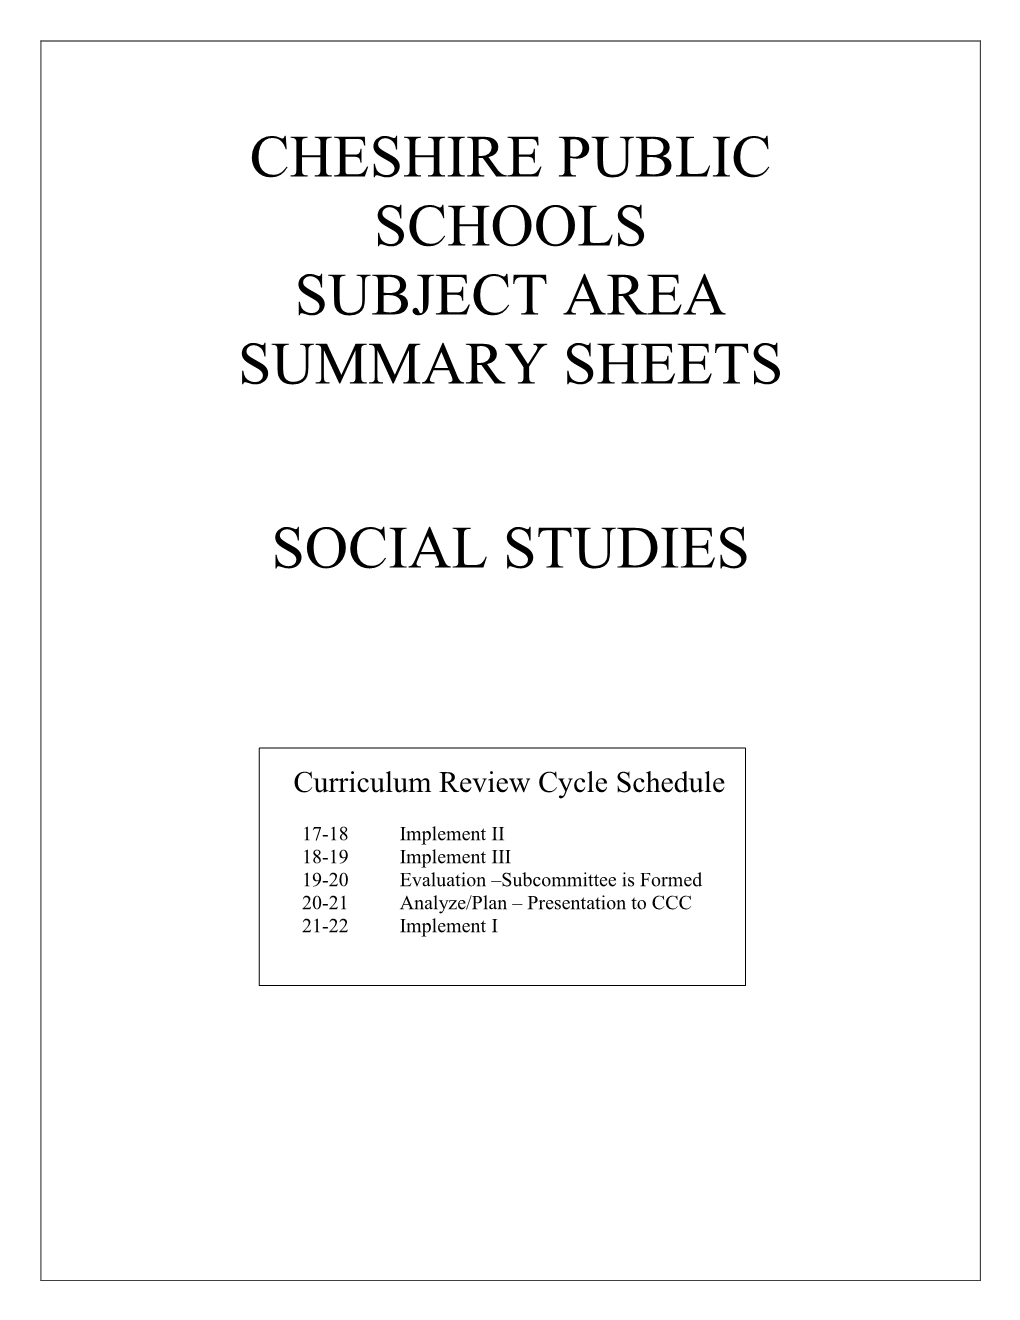 Cheshire Public Schools Subject Area Summary Sheets Social Studies